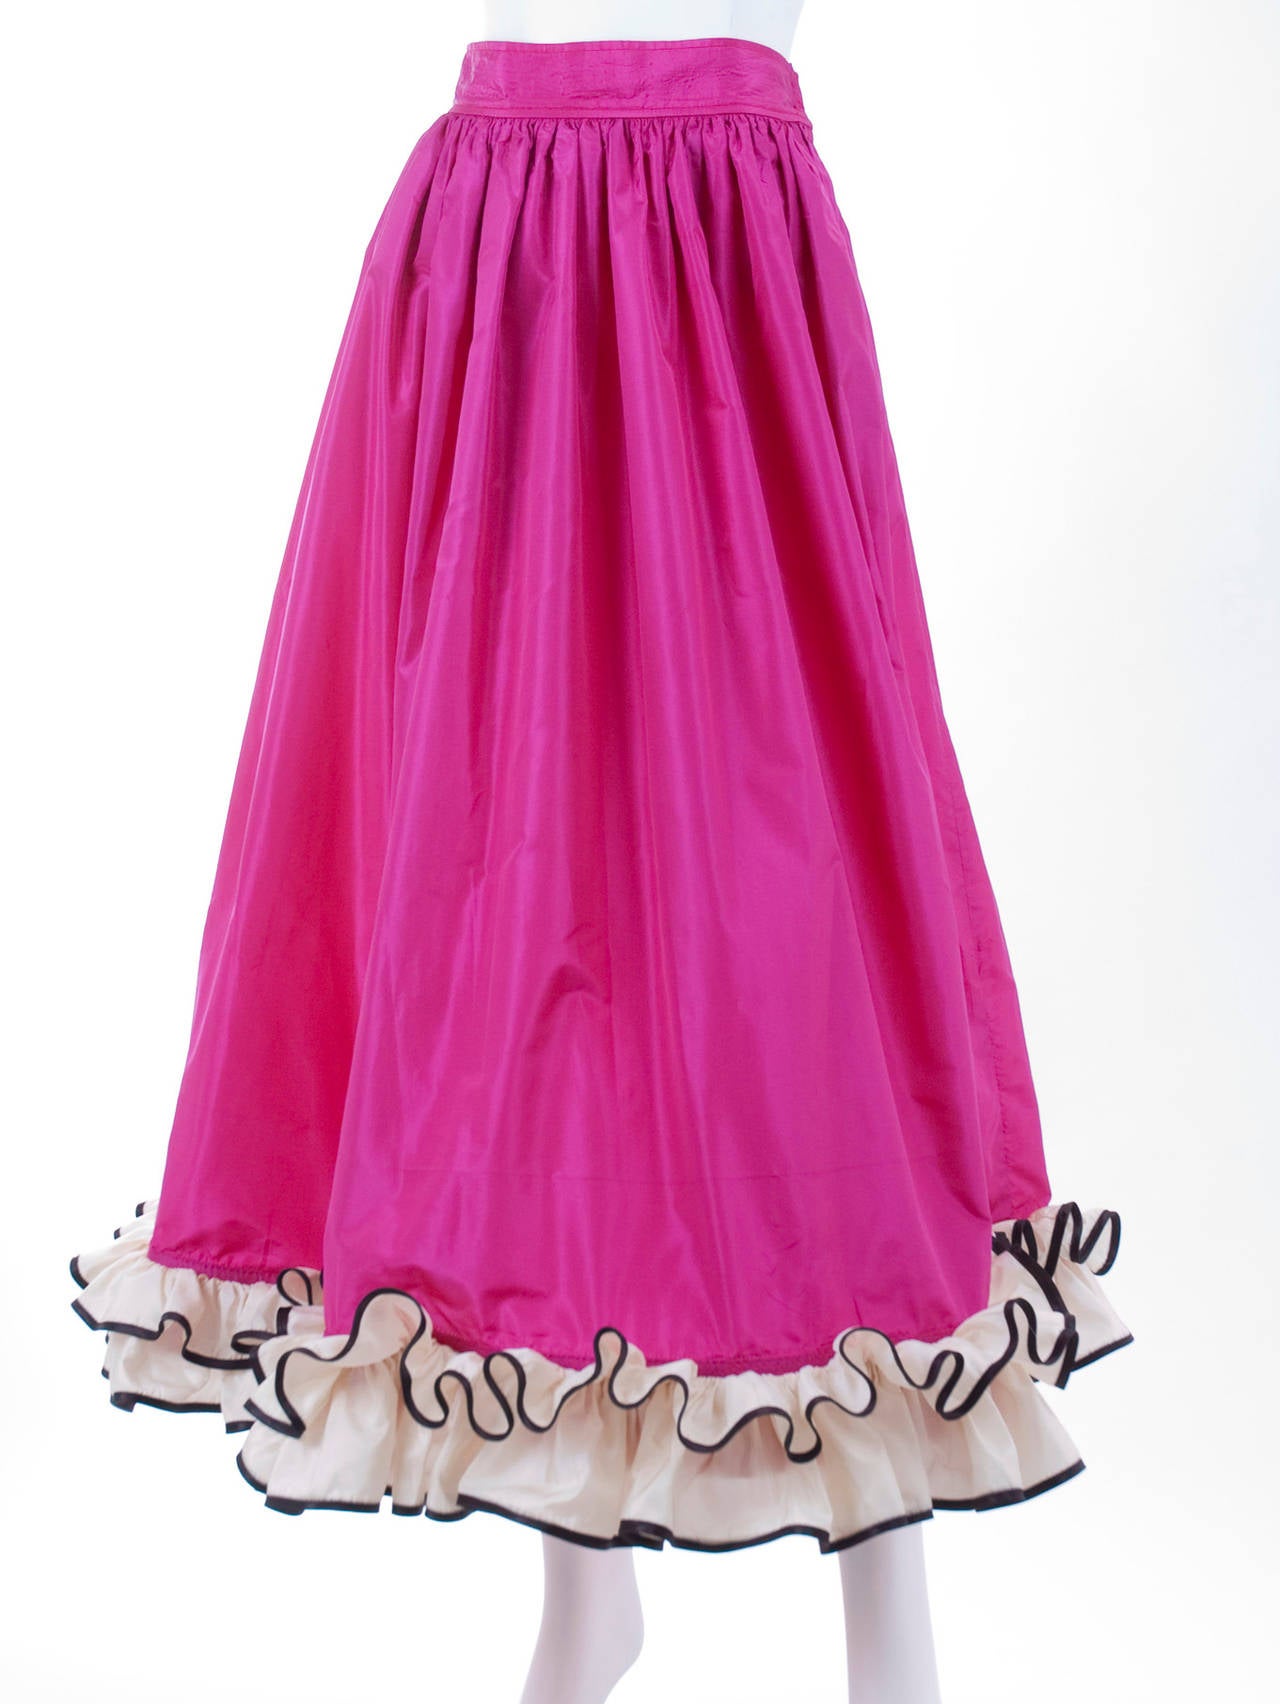 Pink Yves Saint Laurent Evening Skirt For Sale